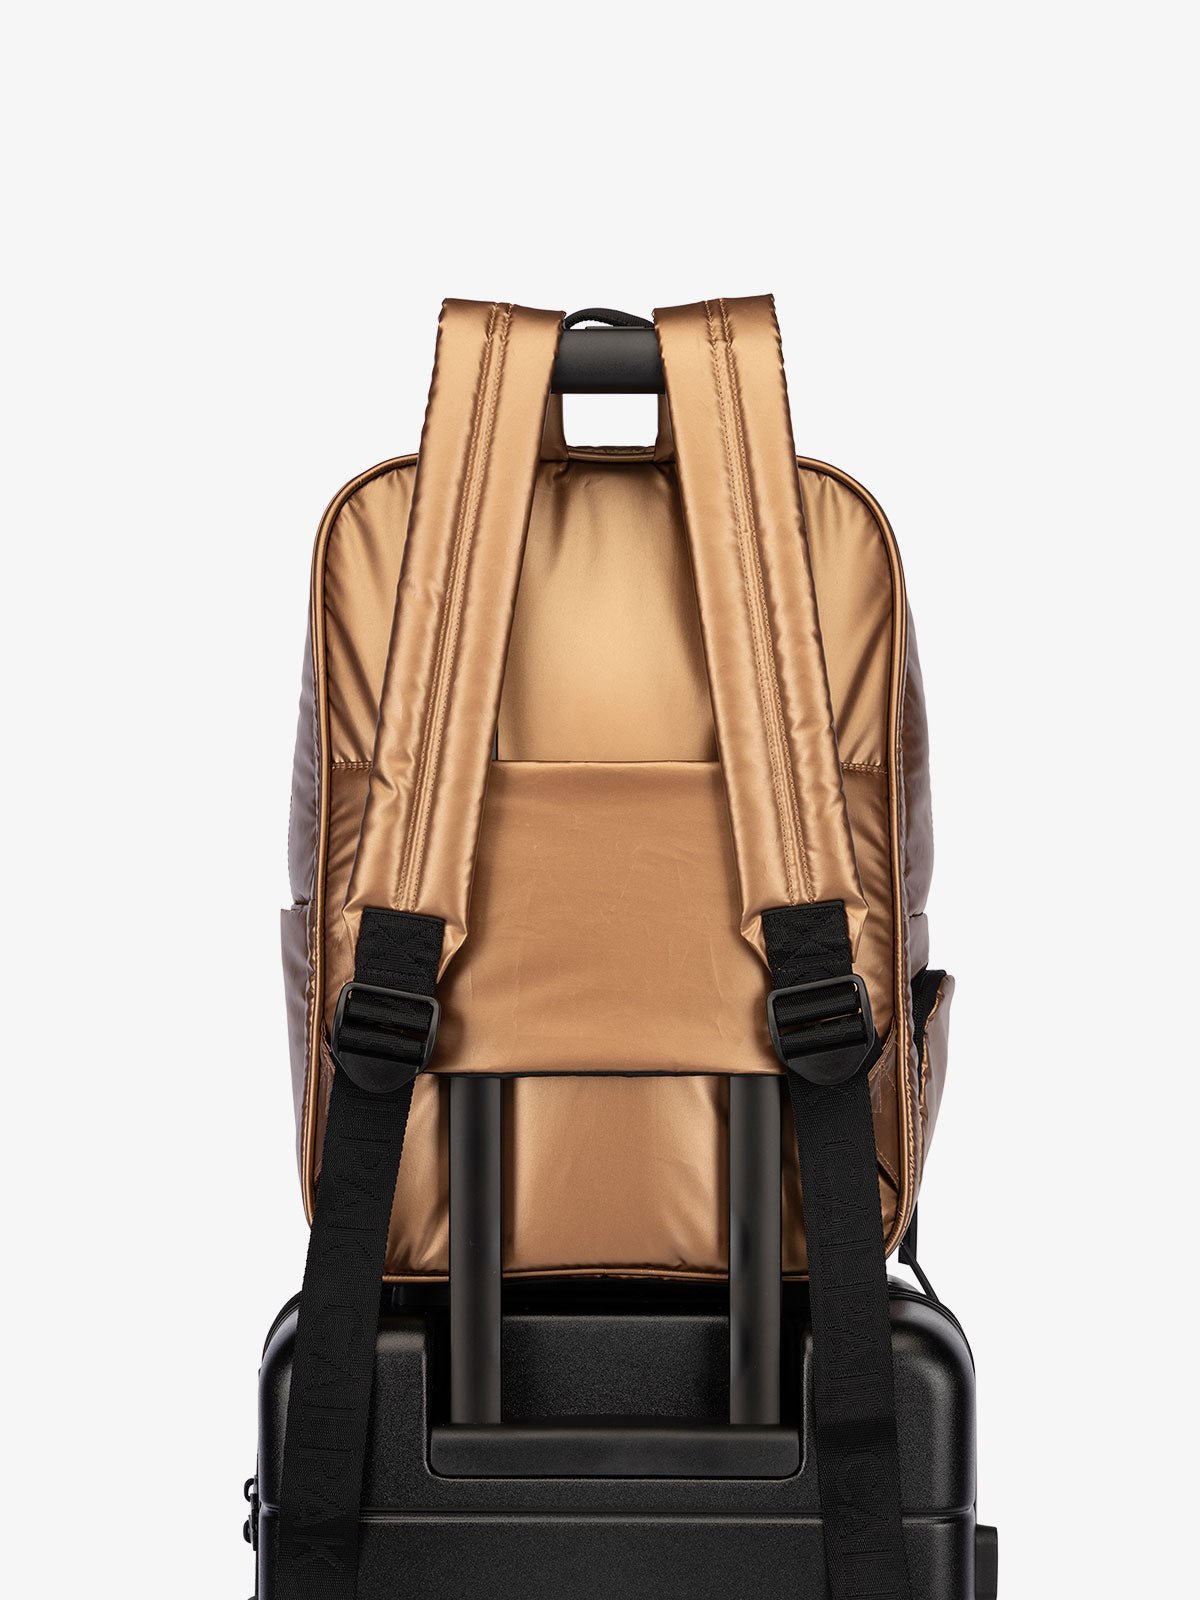 CALPAK water resistant Luka Laptop Backpack with adjustable shoulder straps and trolley sleeve in metallic brown copper